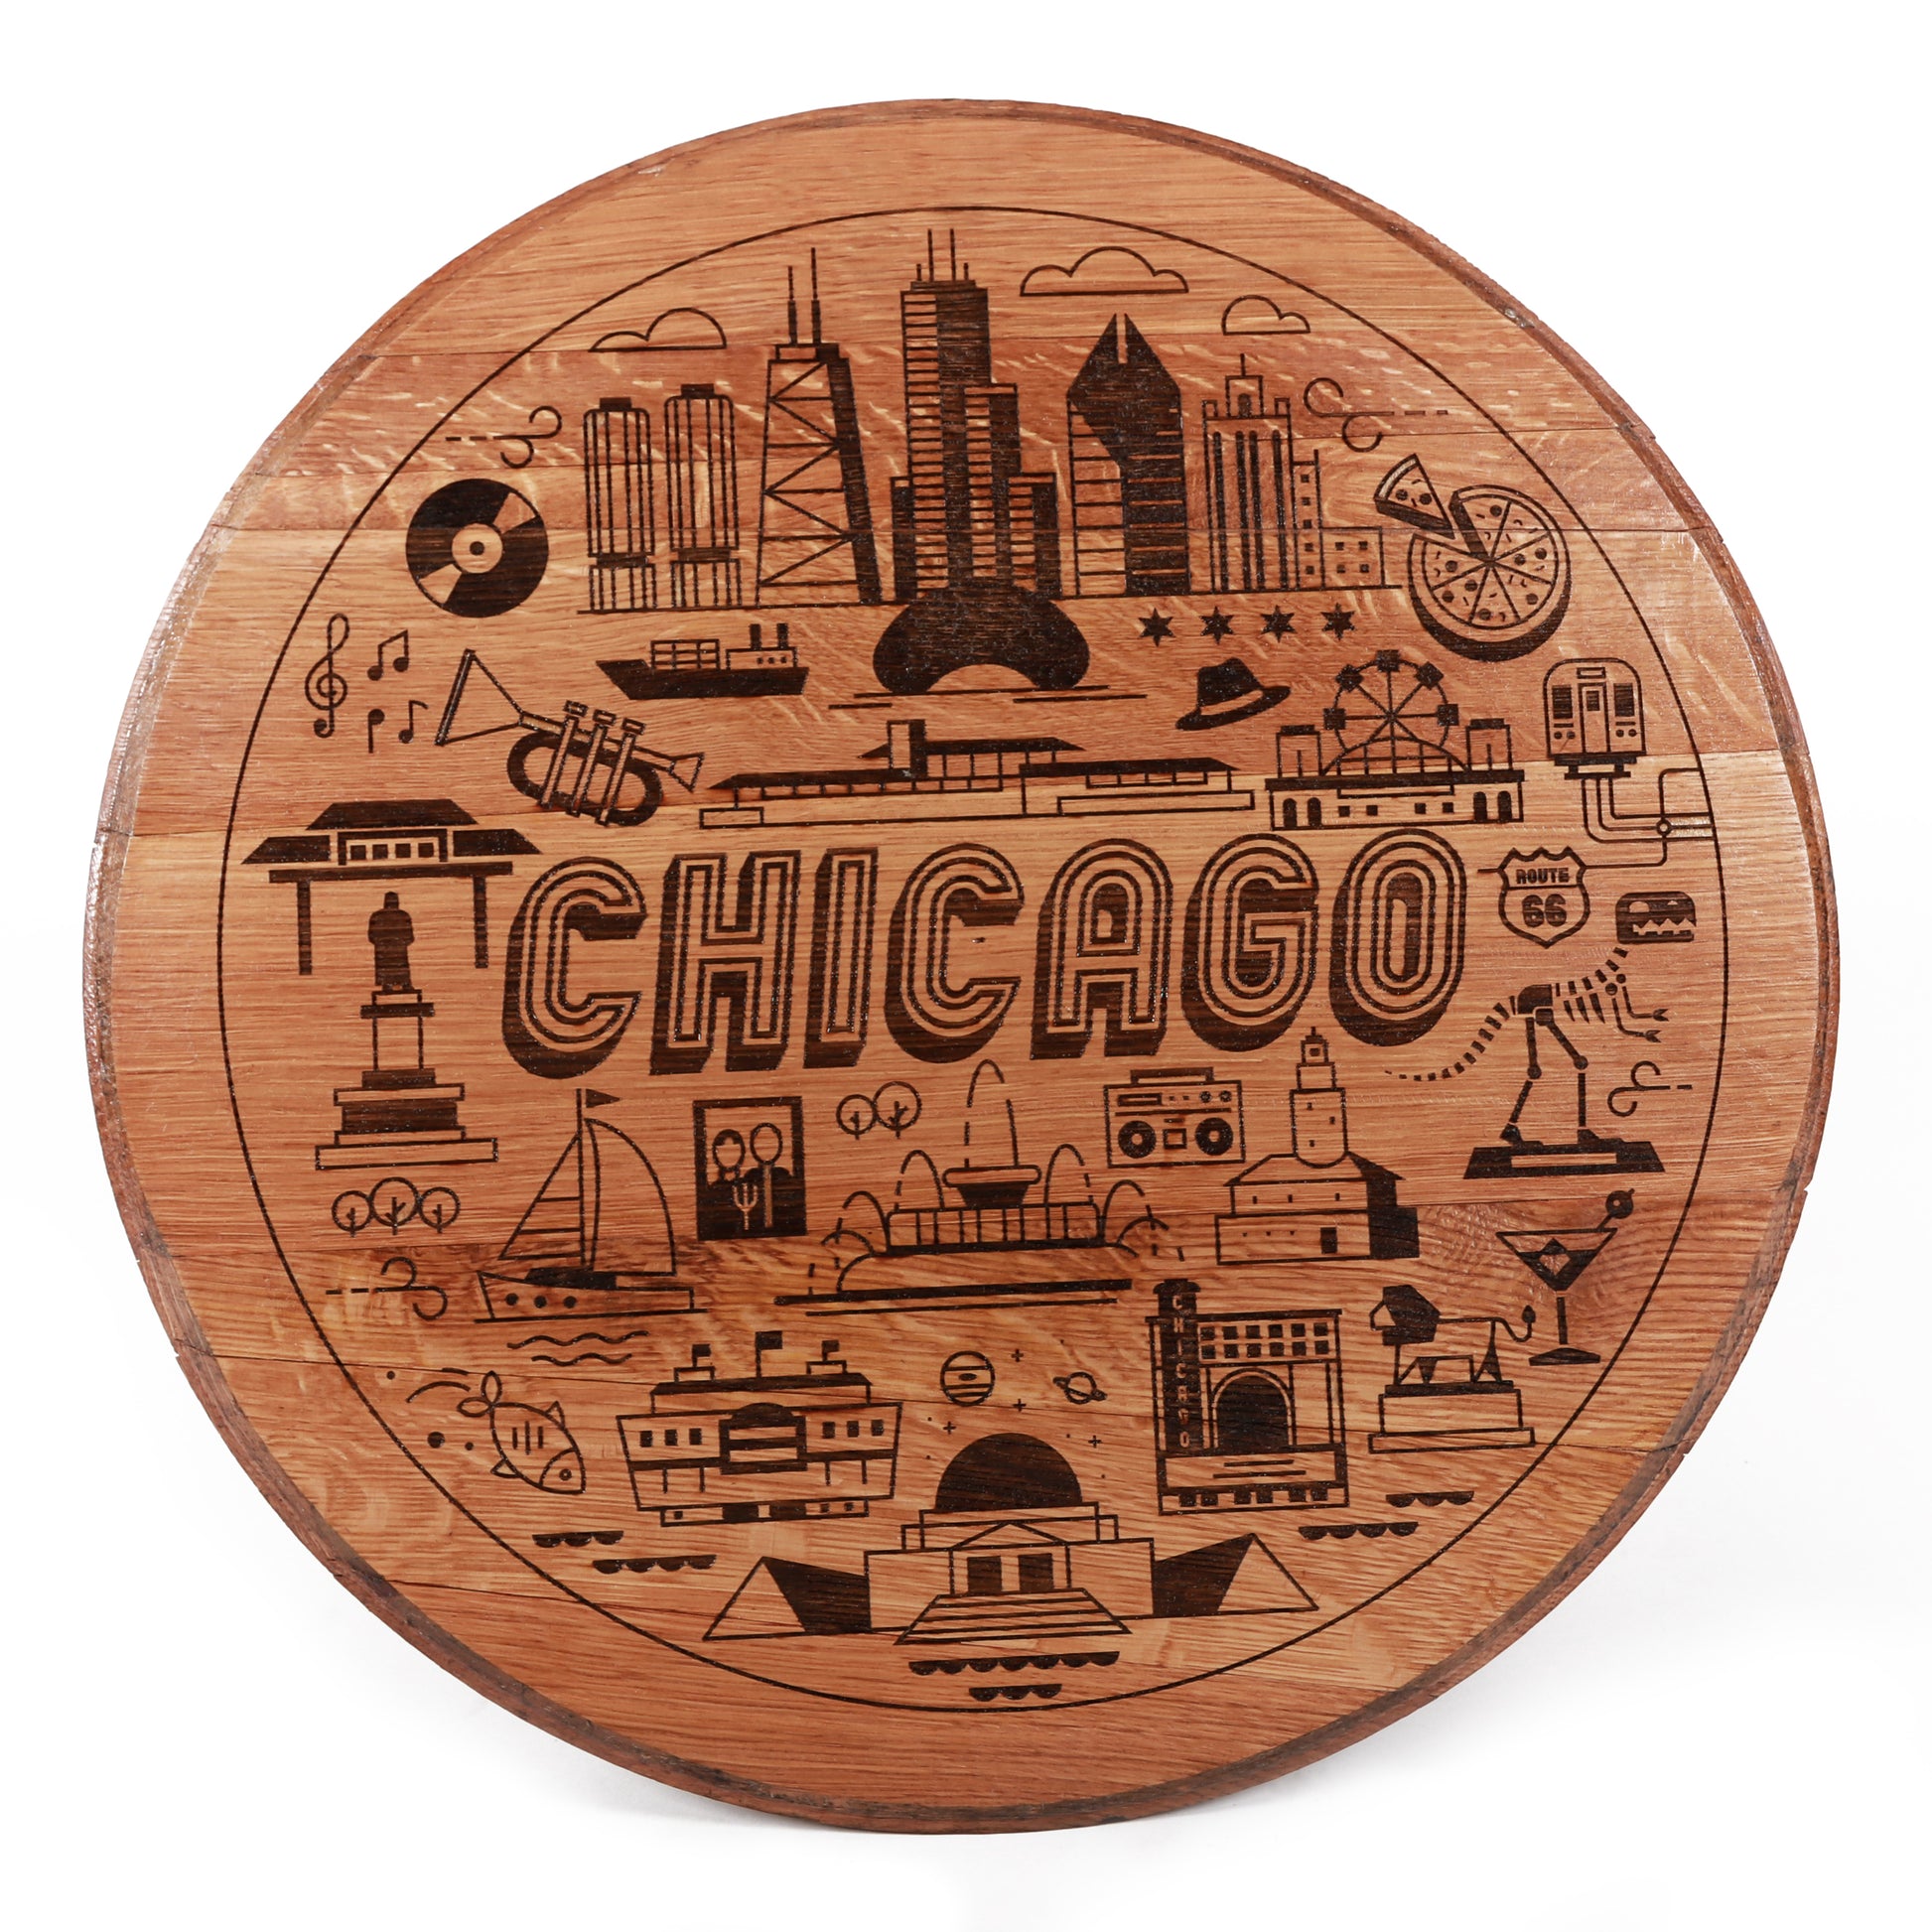 Chicago Design Engraved Whiskey Barrel Head - Motor City Barrels